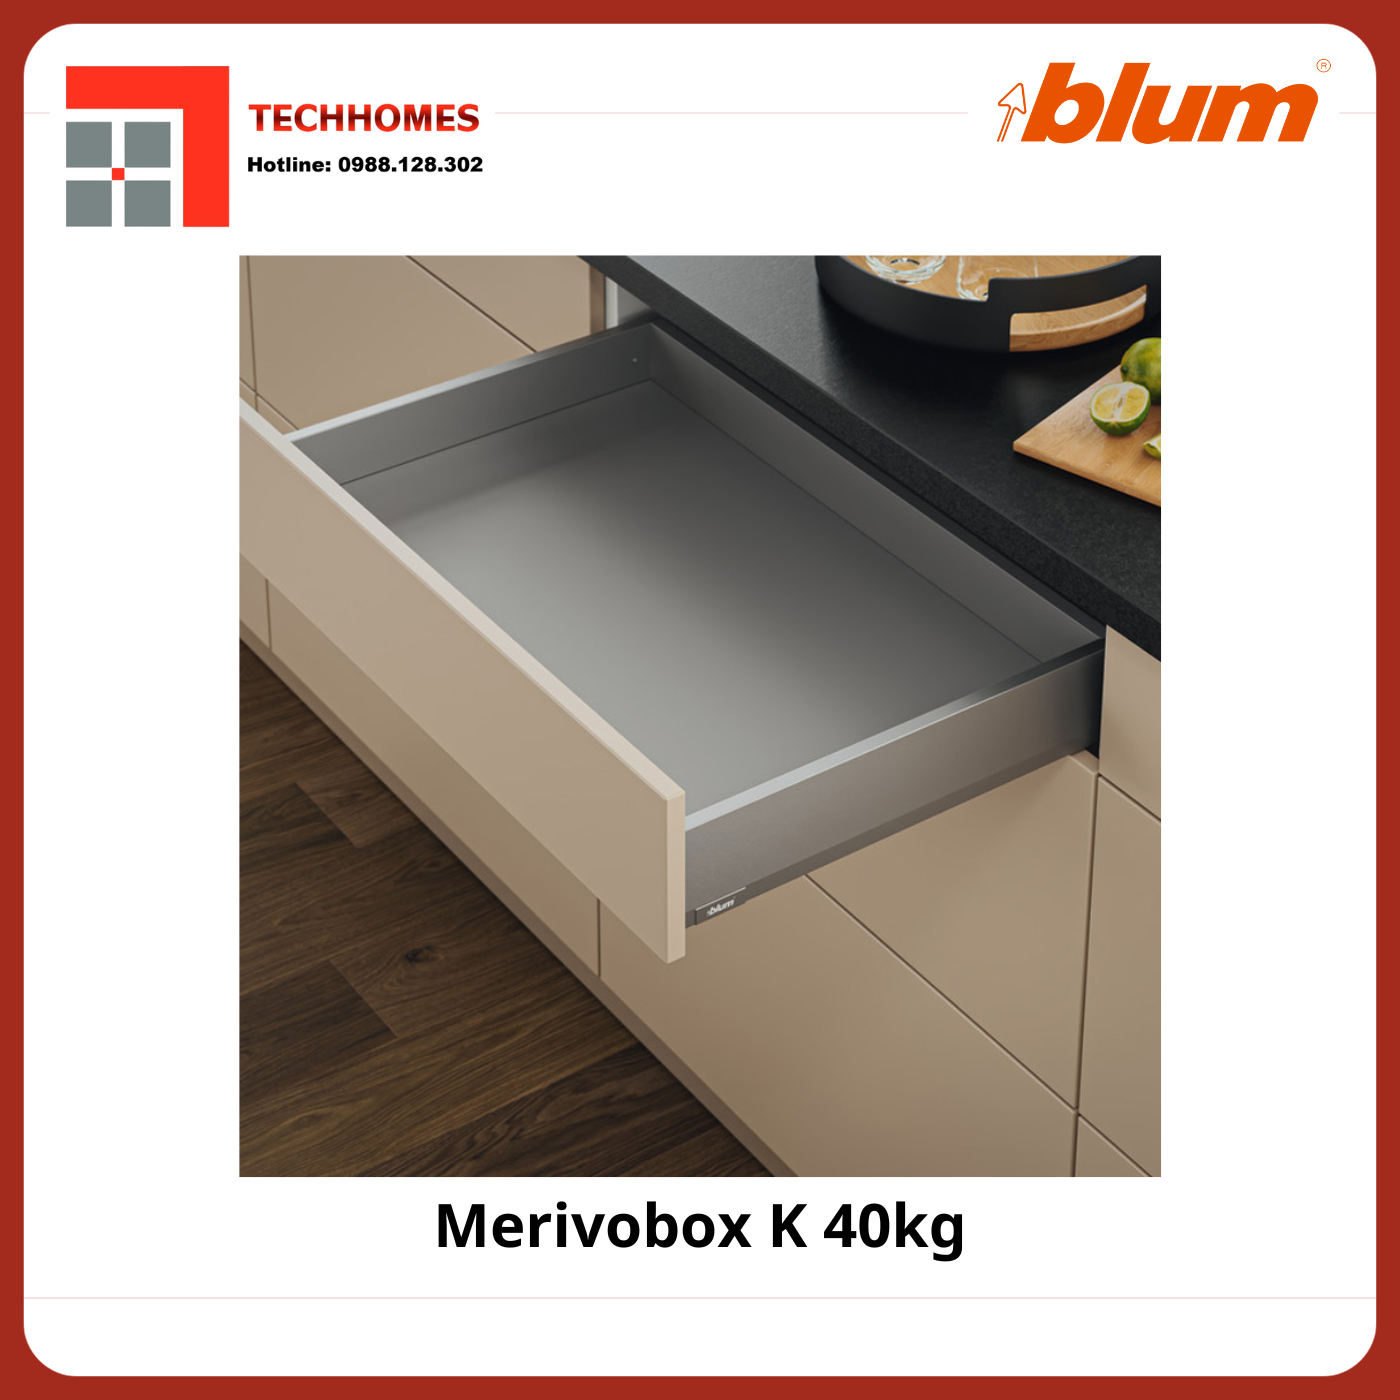 RAY HỘP BLUM MERIVOBOX K 40KG - Merivobox K 40kg